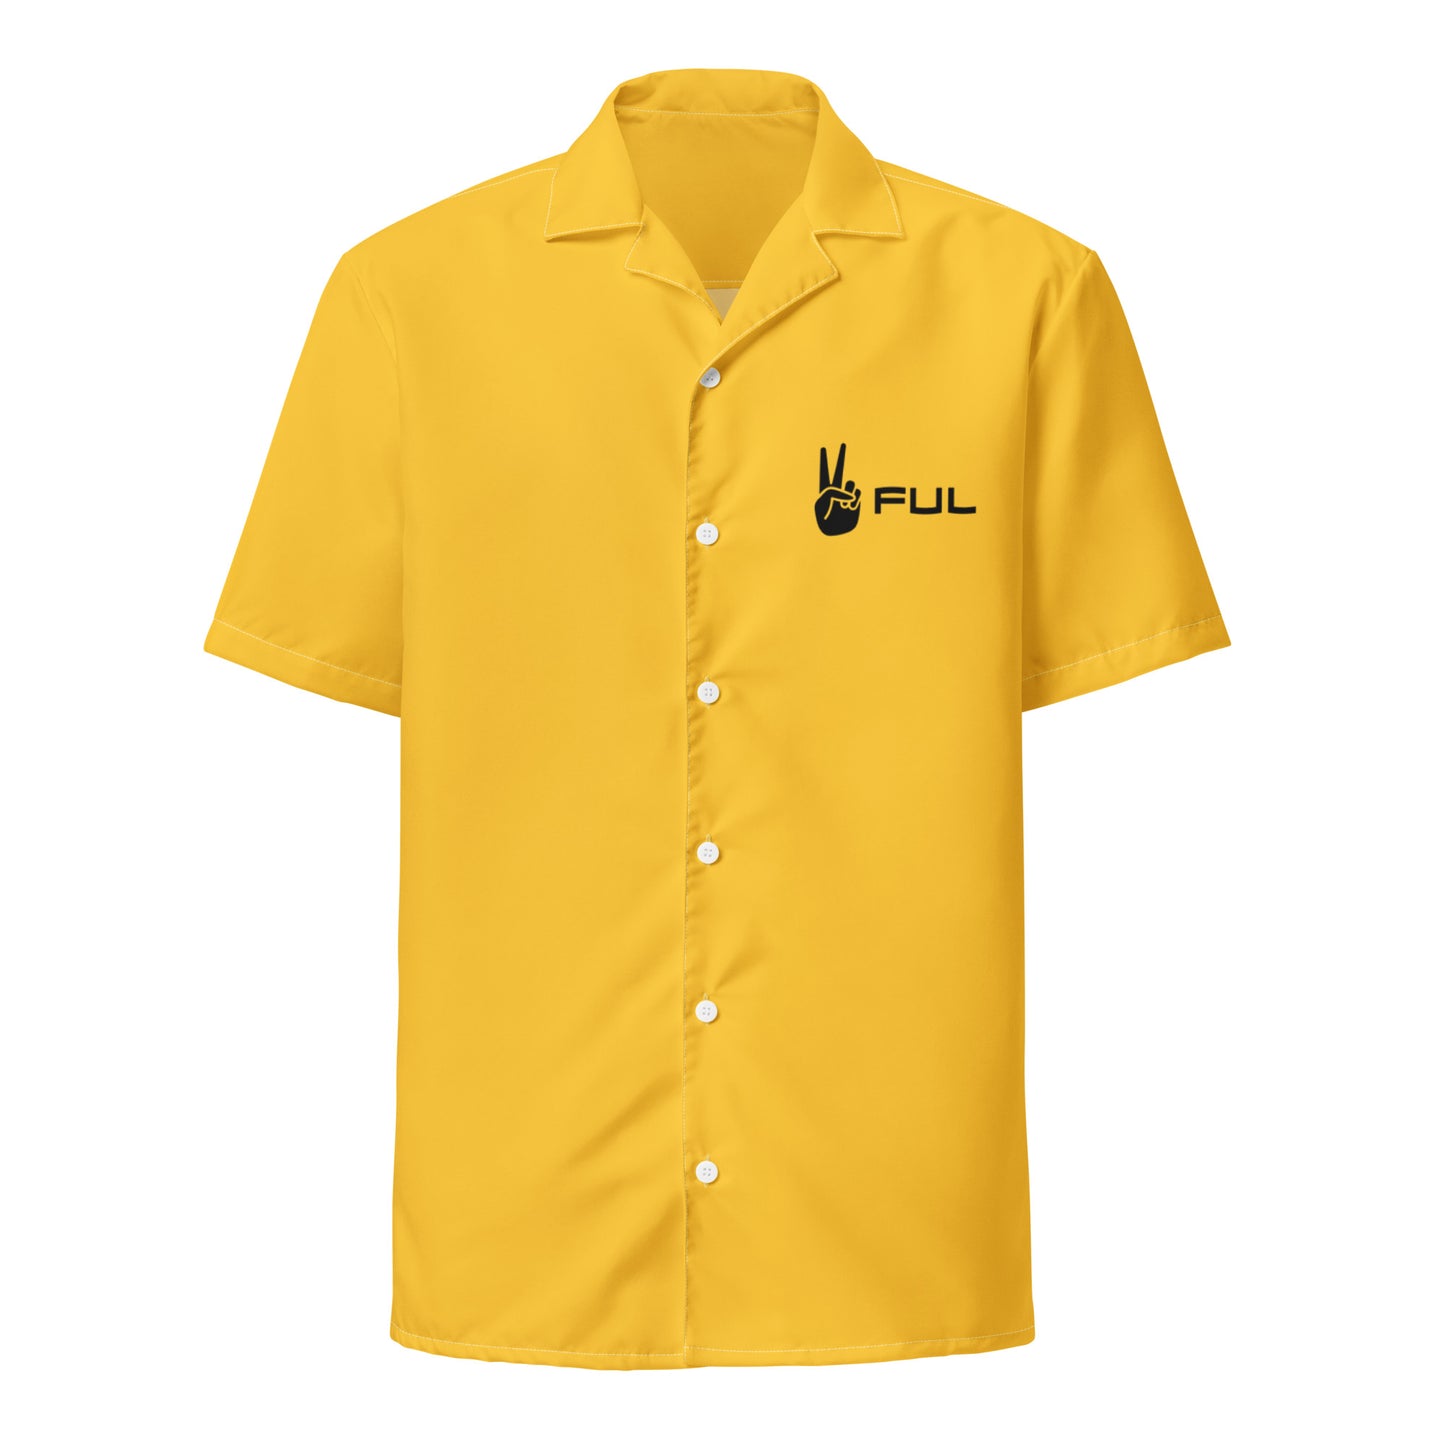 Unisex Sunny Yellow Peaceful button shirt